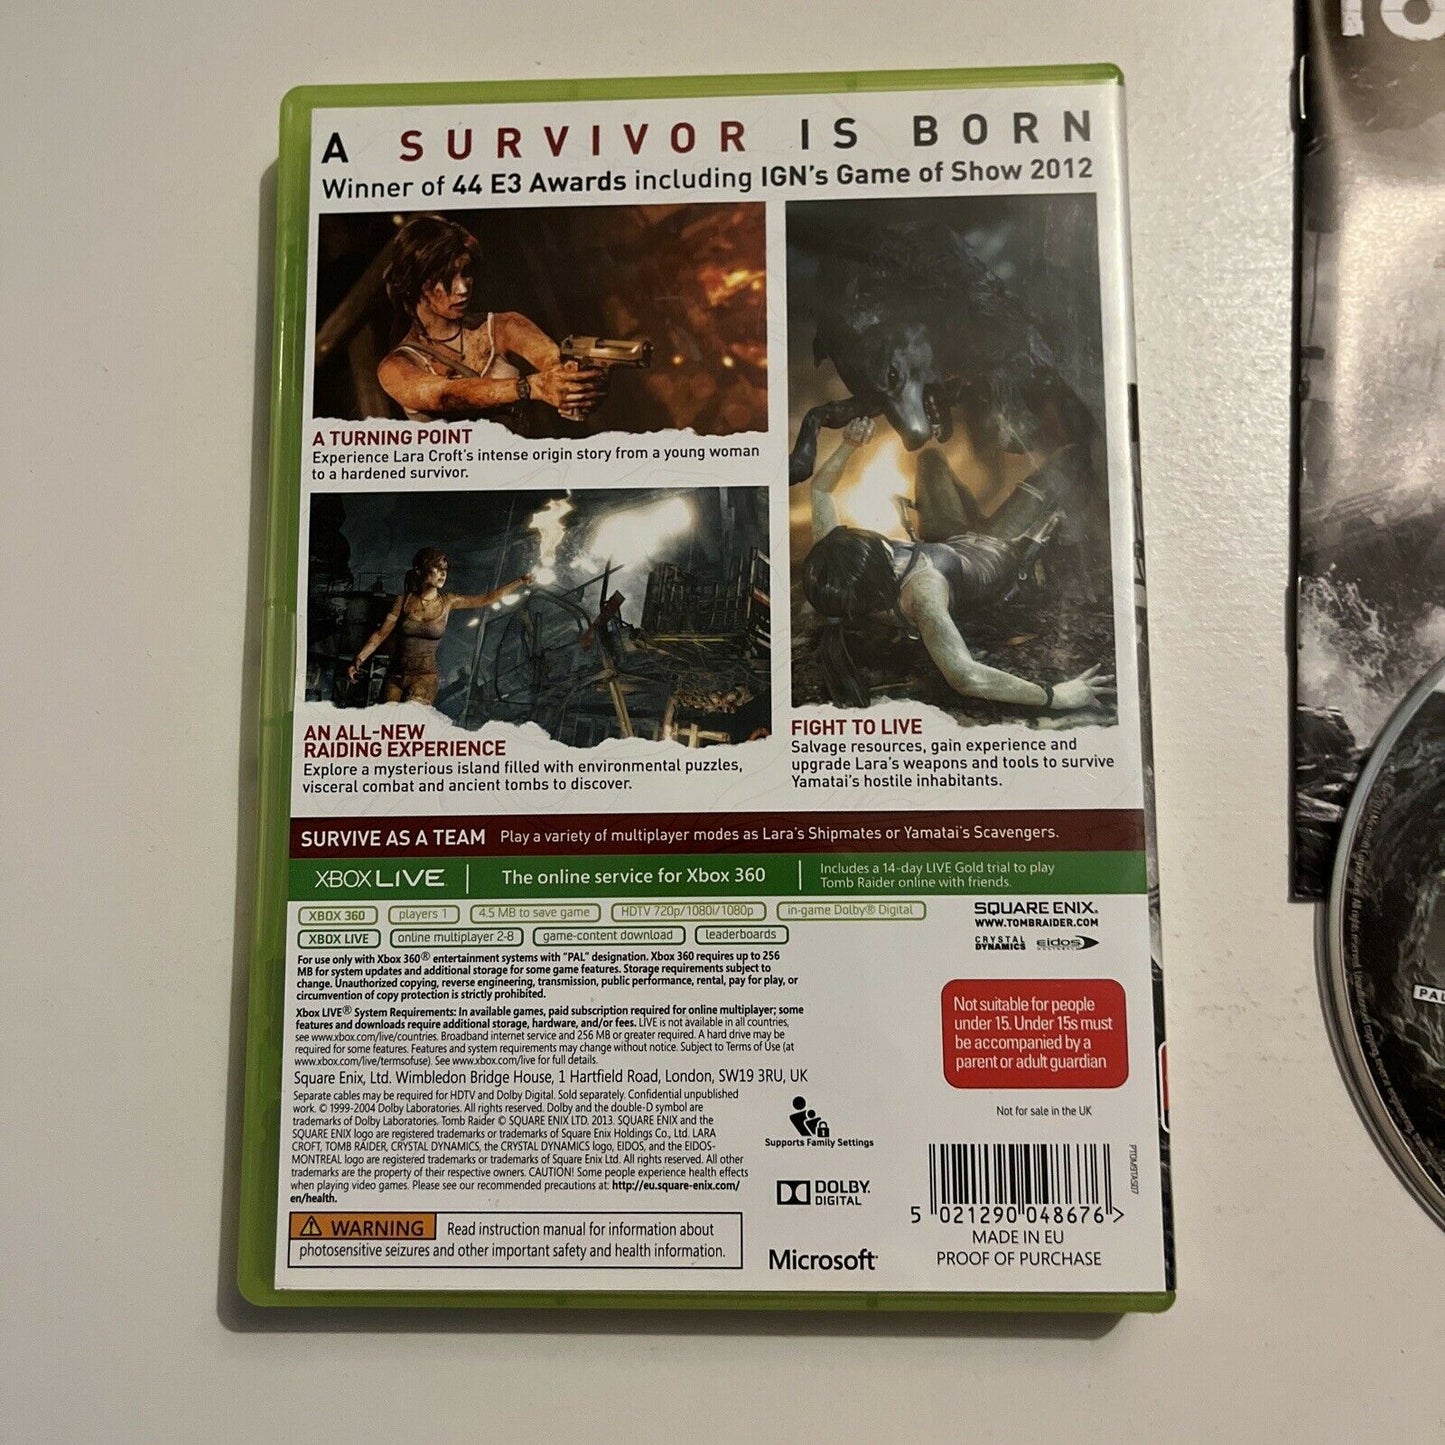 Tomb Raider - Microsoft Xbox 360 - Includes Manual PAL